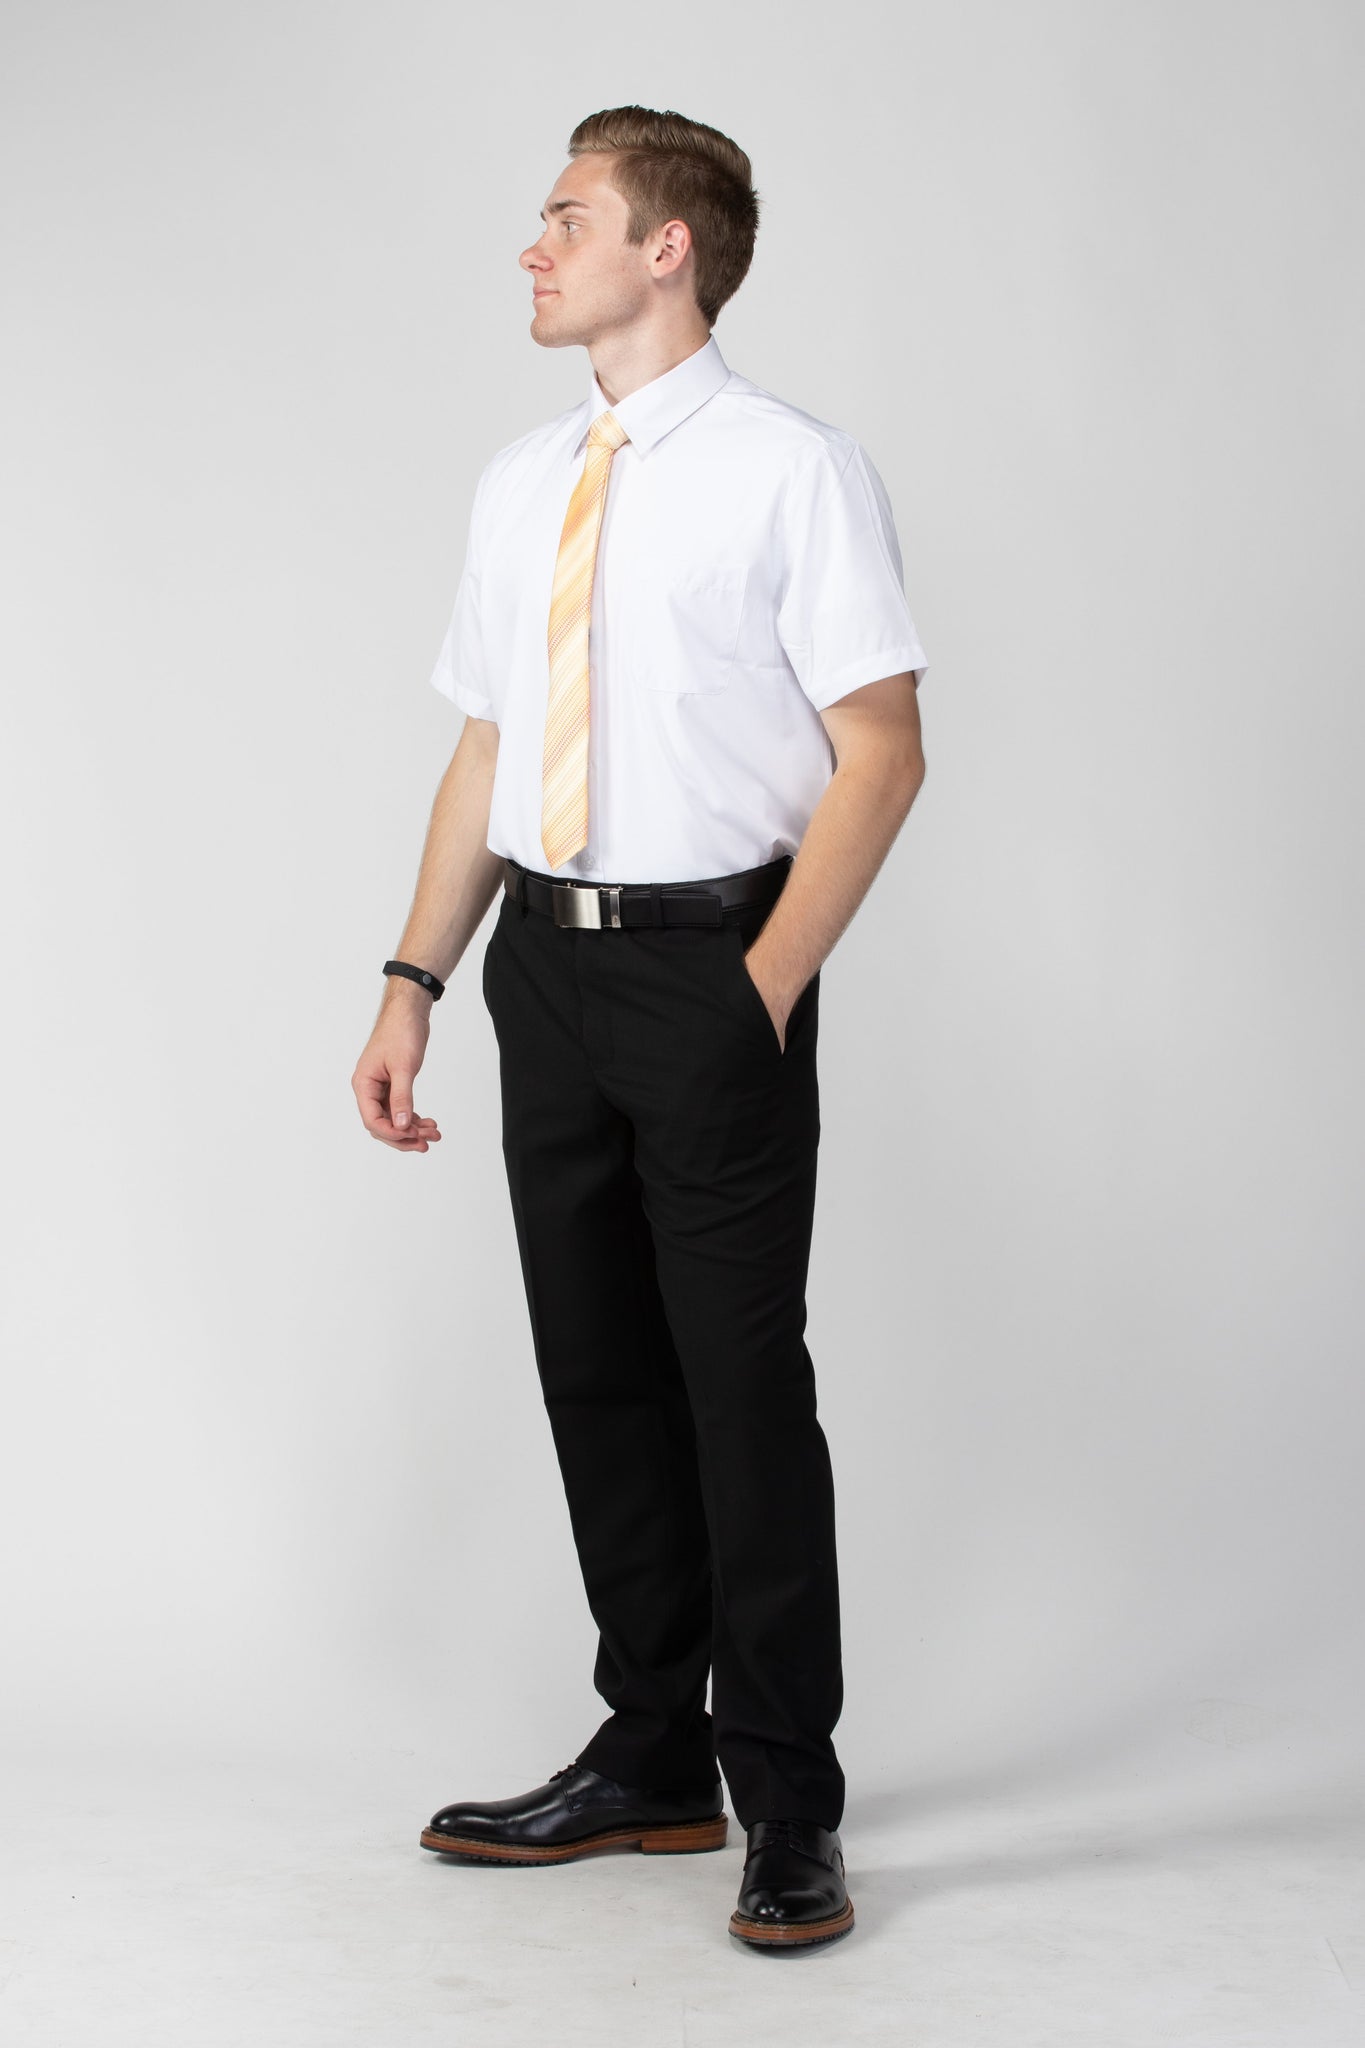 Robbins & Brooks 4-Way Flex White Dress Shirt Short Sleeve